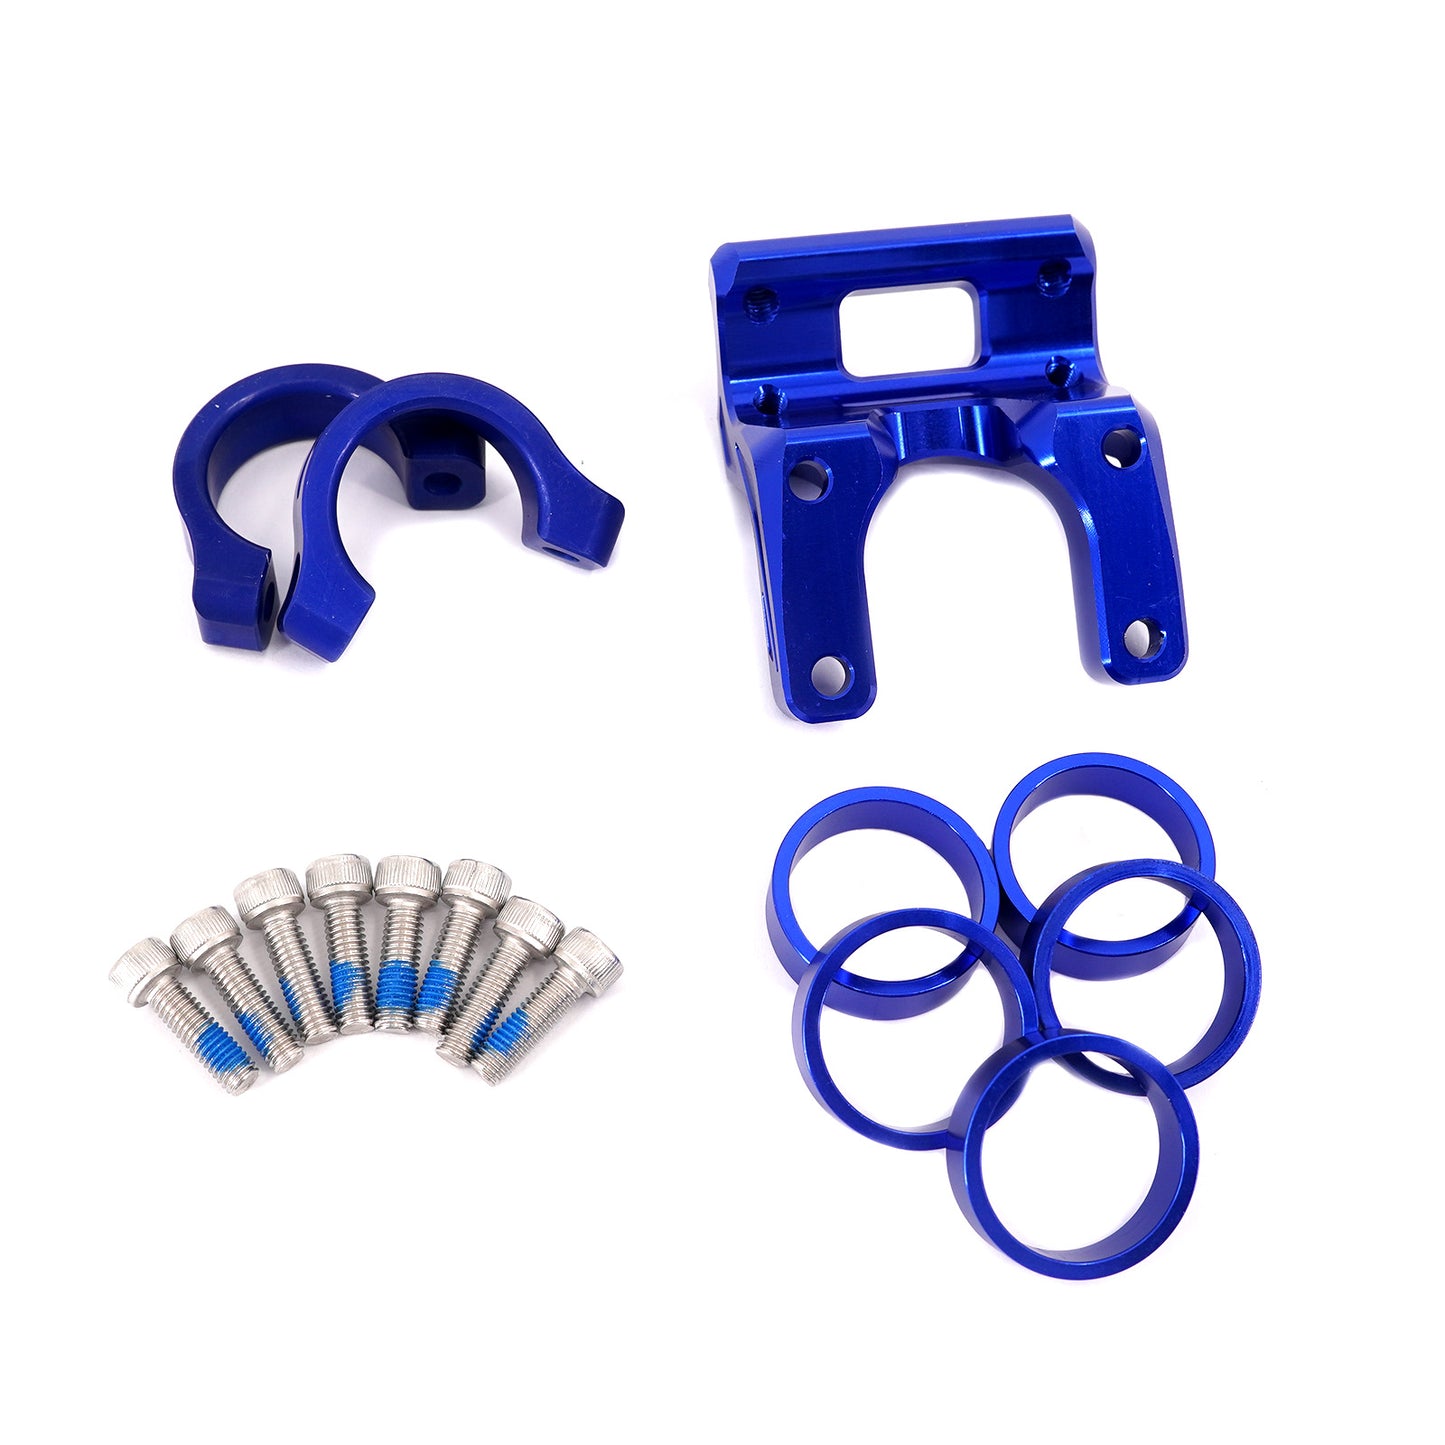 KKE Blue Handlebar Risers Kit Fit Sur-Ron Light Bee X  e-Bike Bracket Clamps Pads